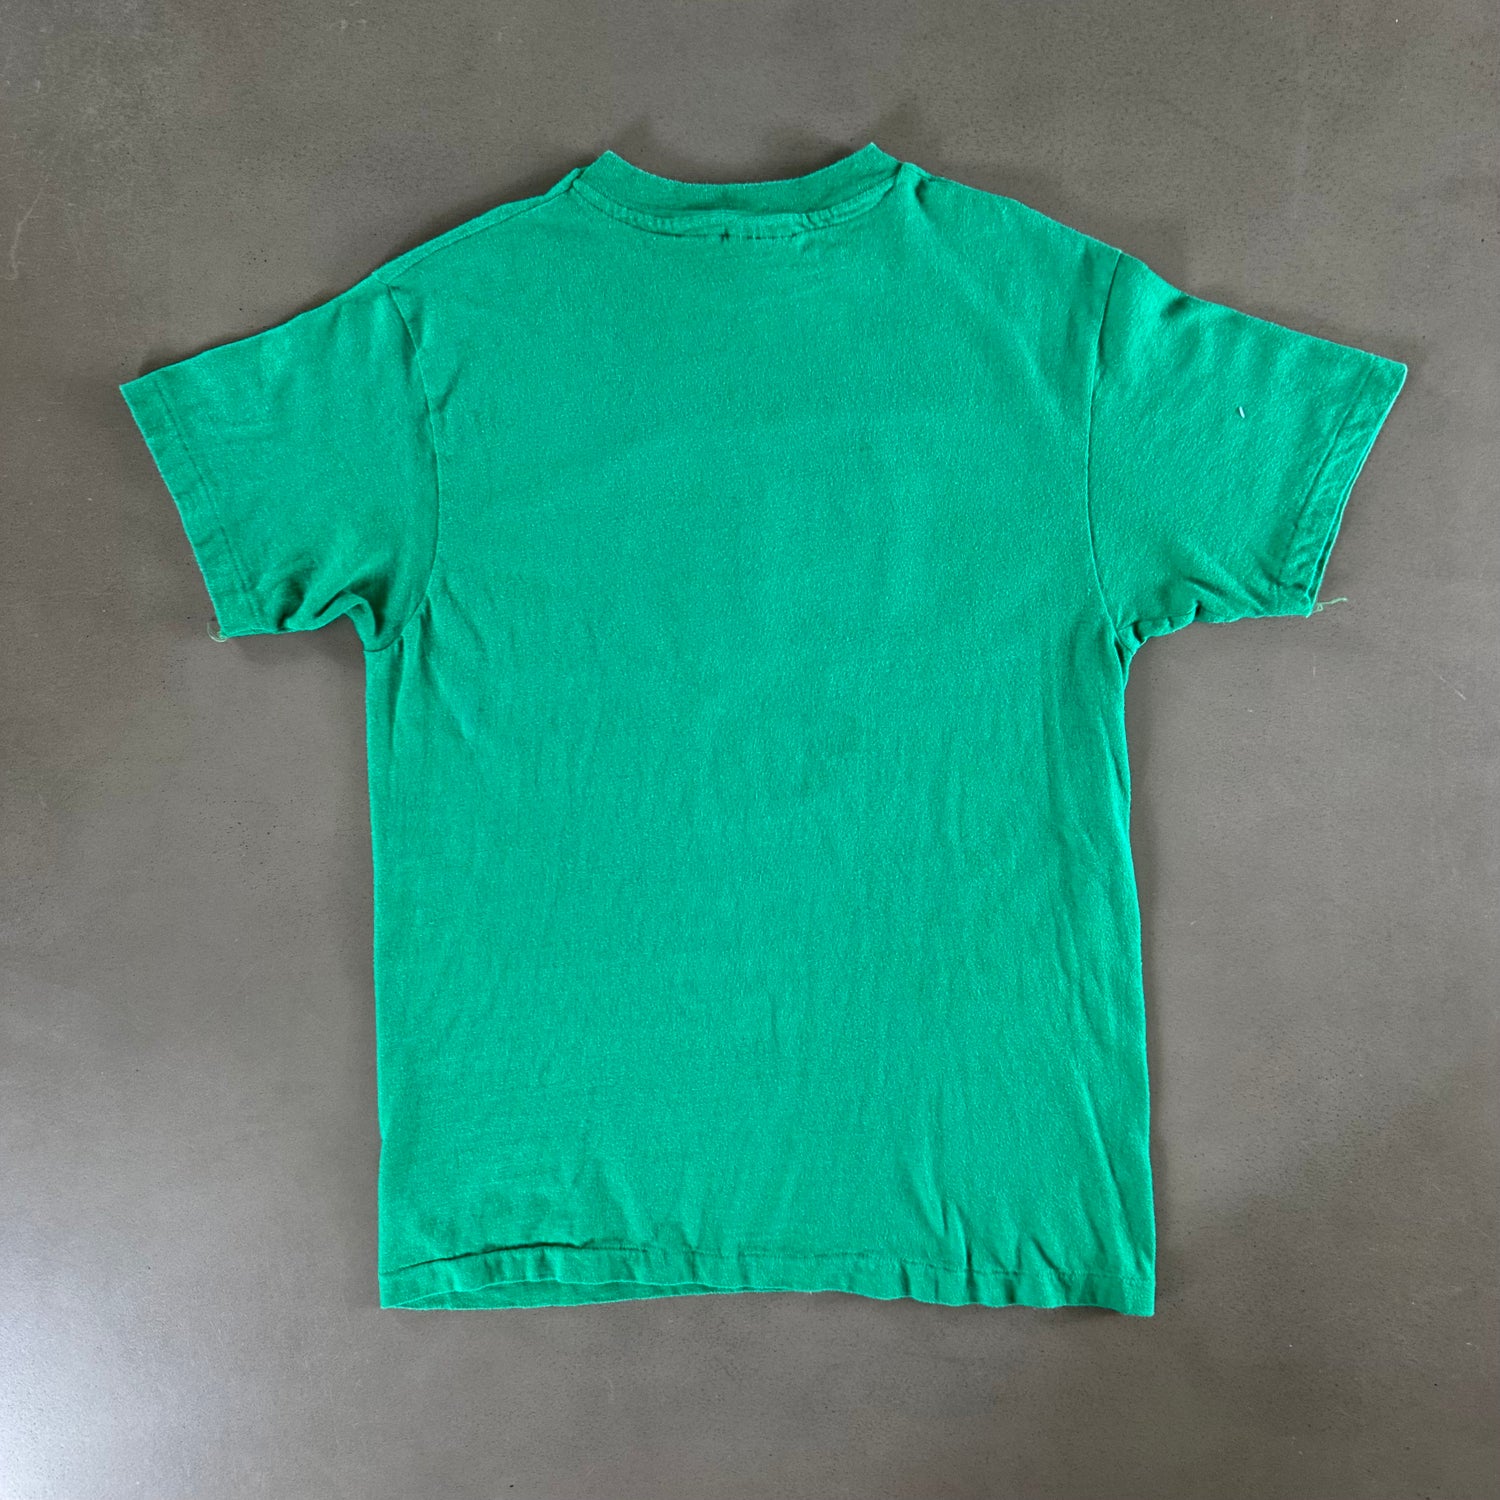 Vintage 1983 Woody Jackson T-shirt size Medium